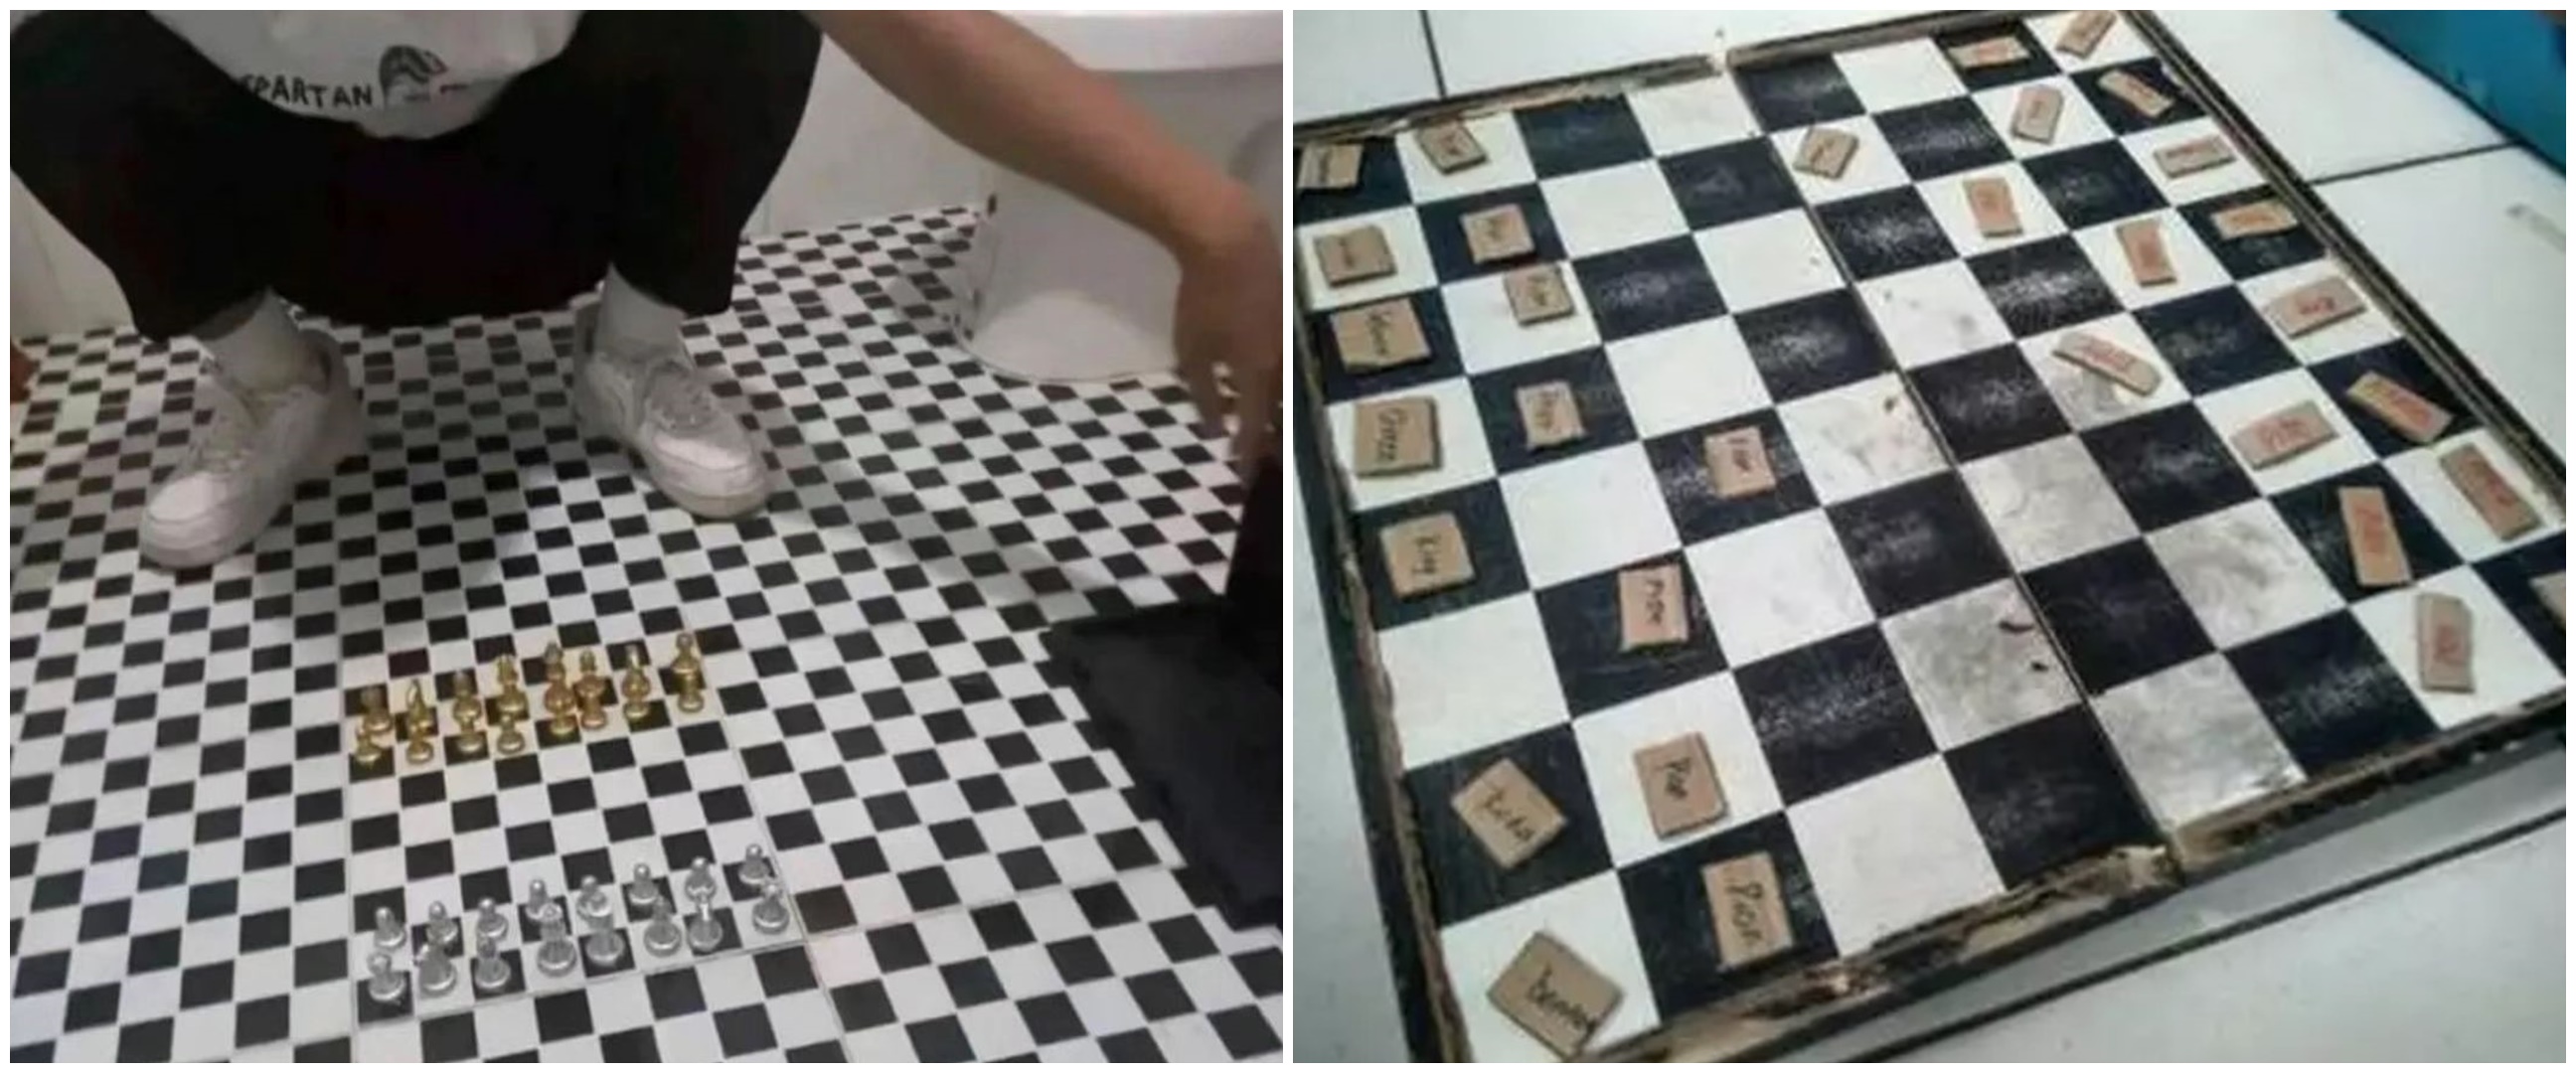 11 Potret kocak orang main catur dengan cara antimainstream ini bikin geleng kepala, absurd pol